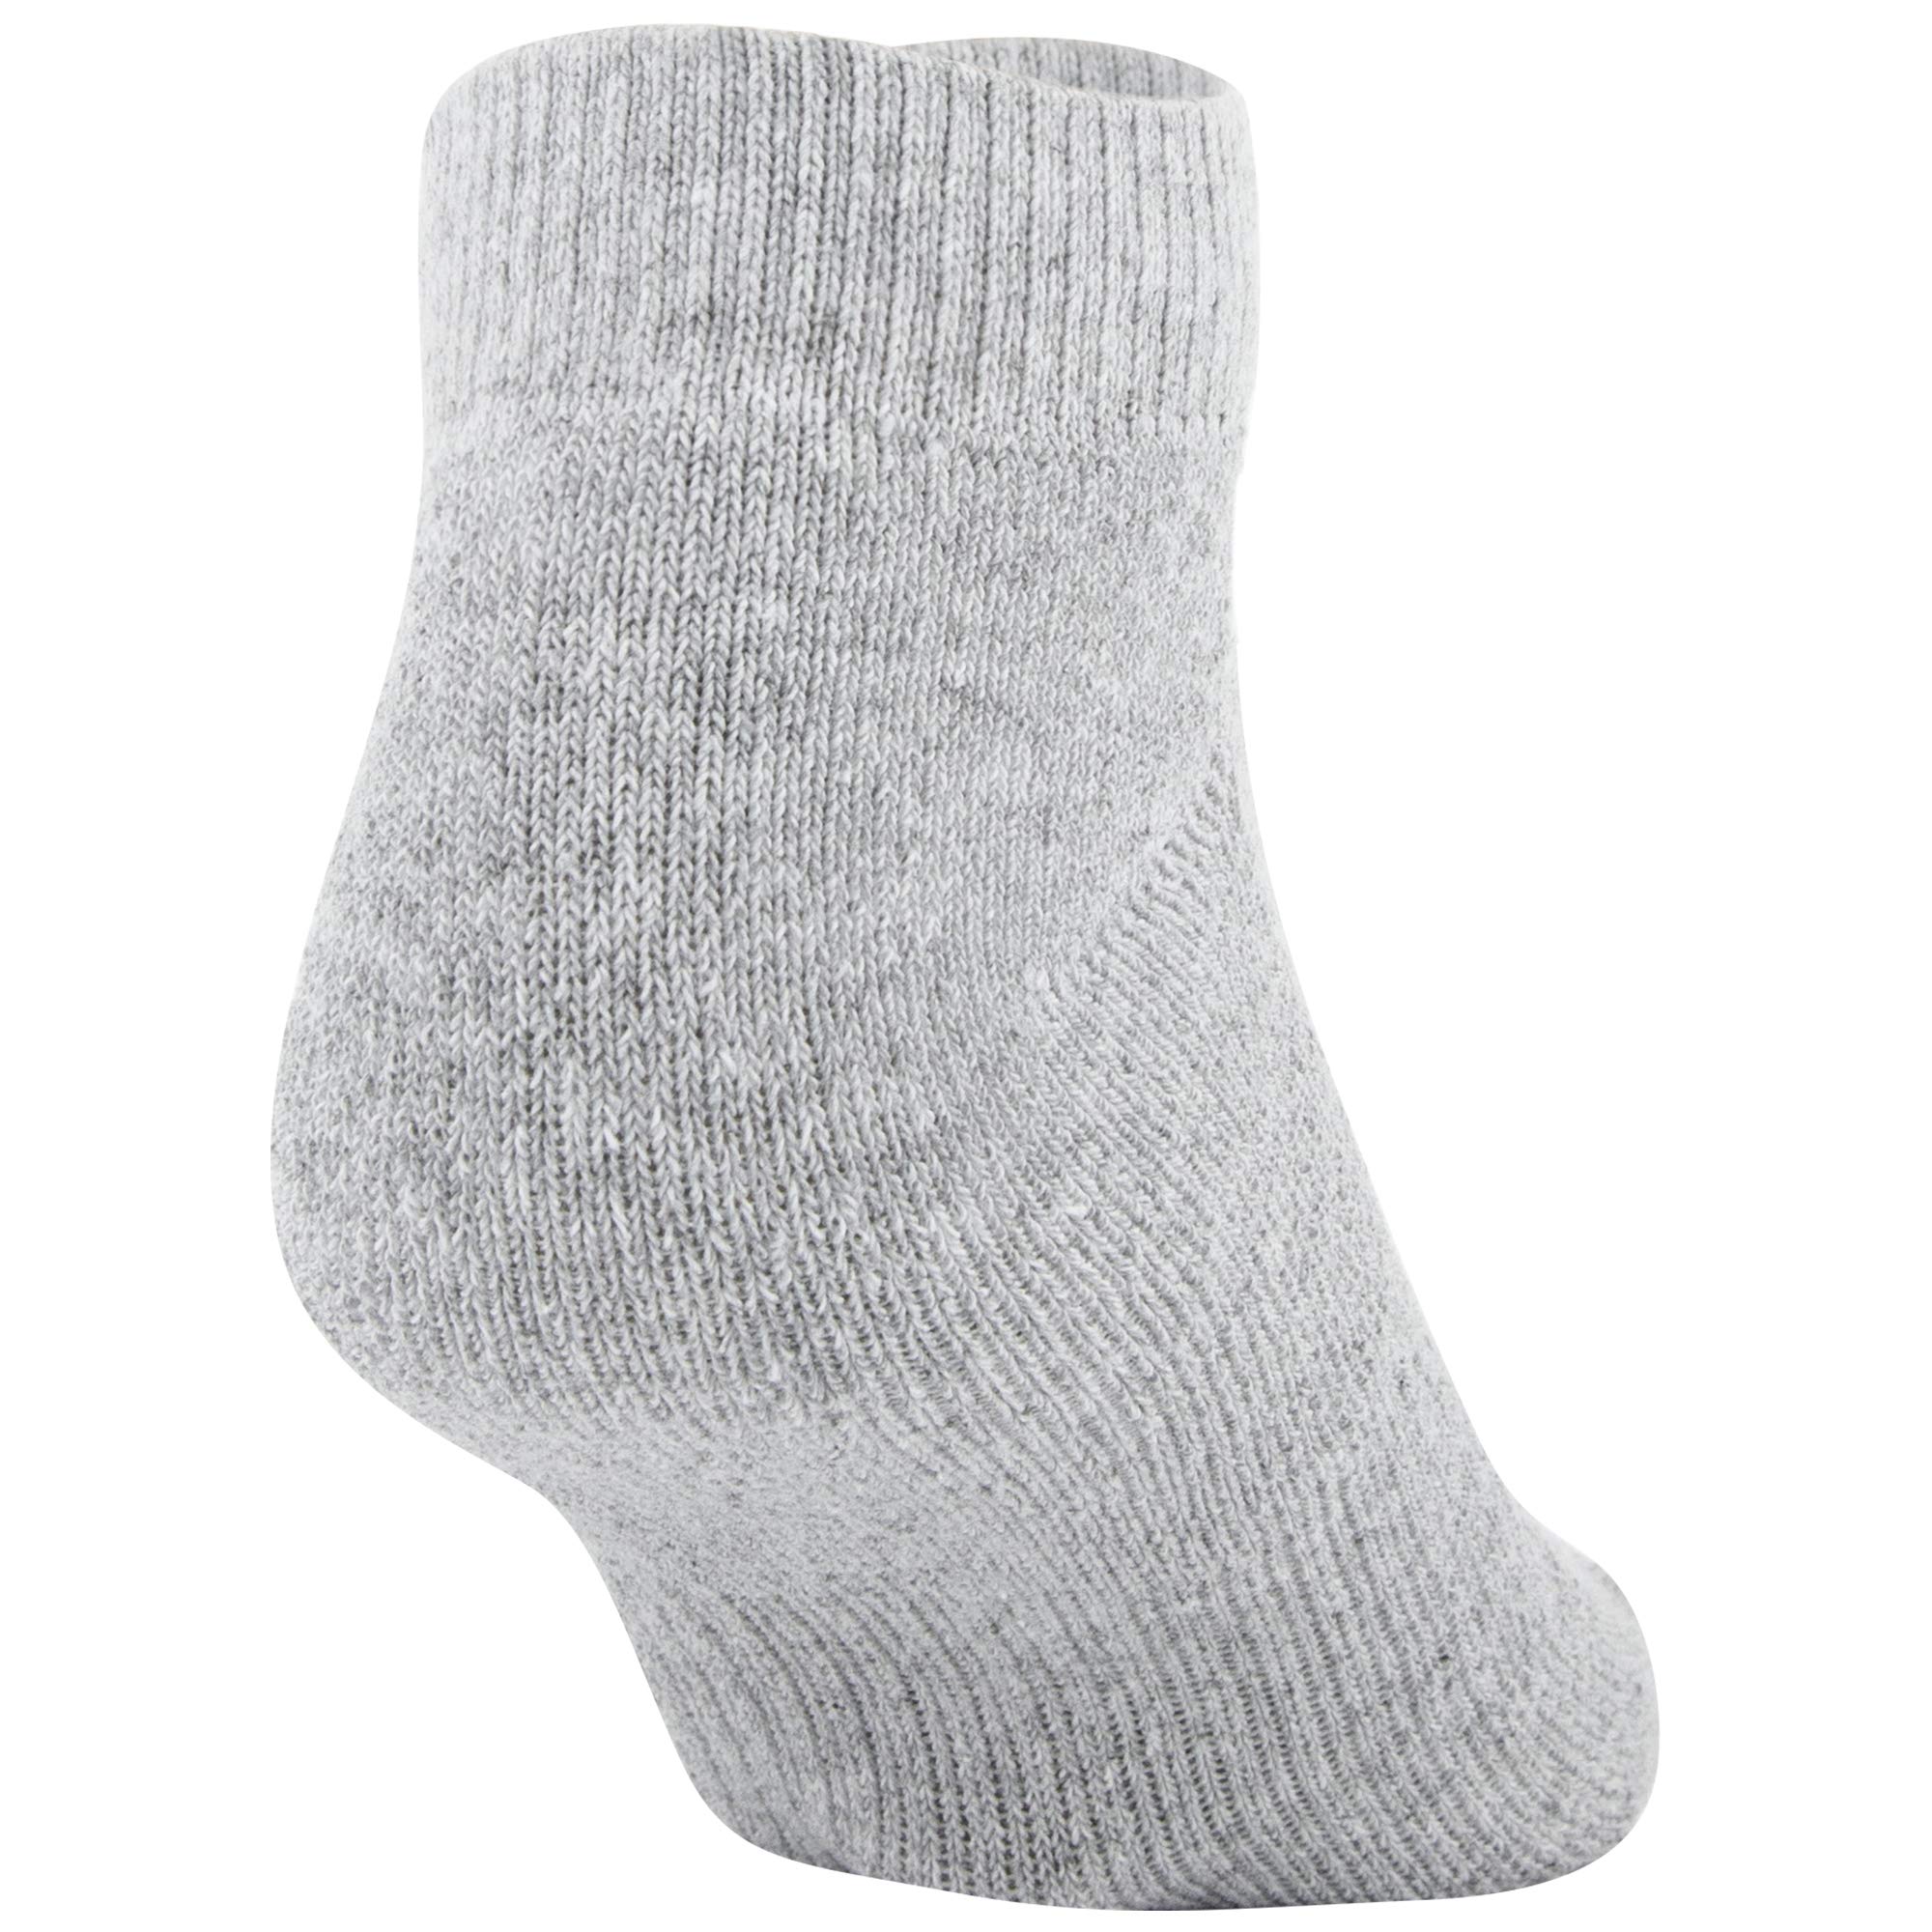 Gildan Men's Active Cotton Low Cut Socks, 10-Pairs